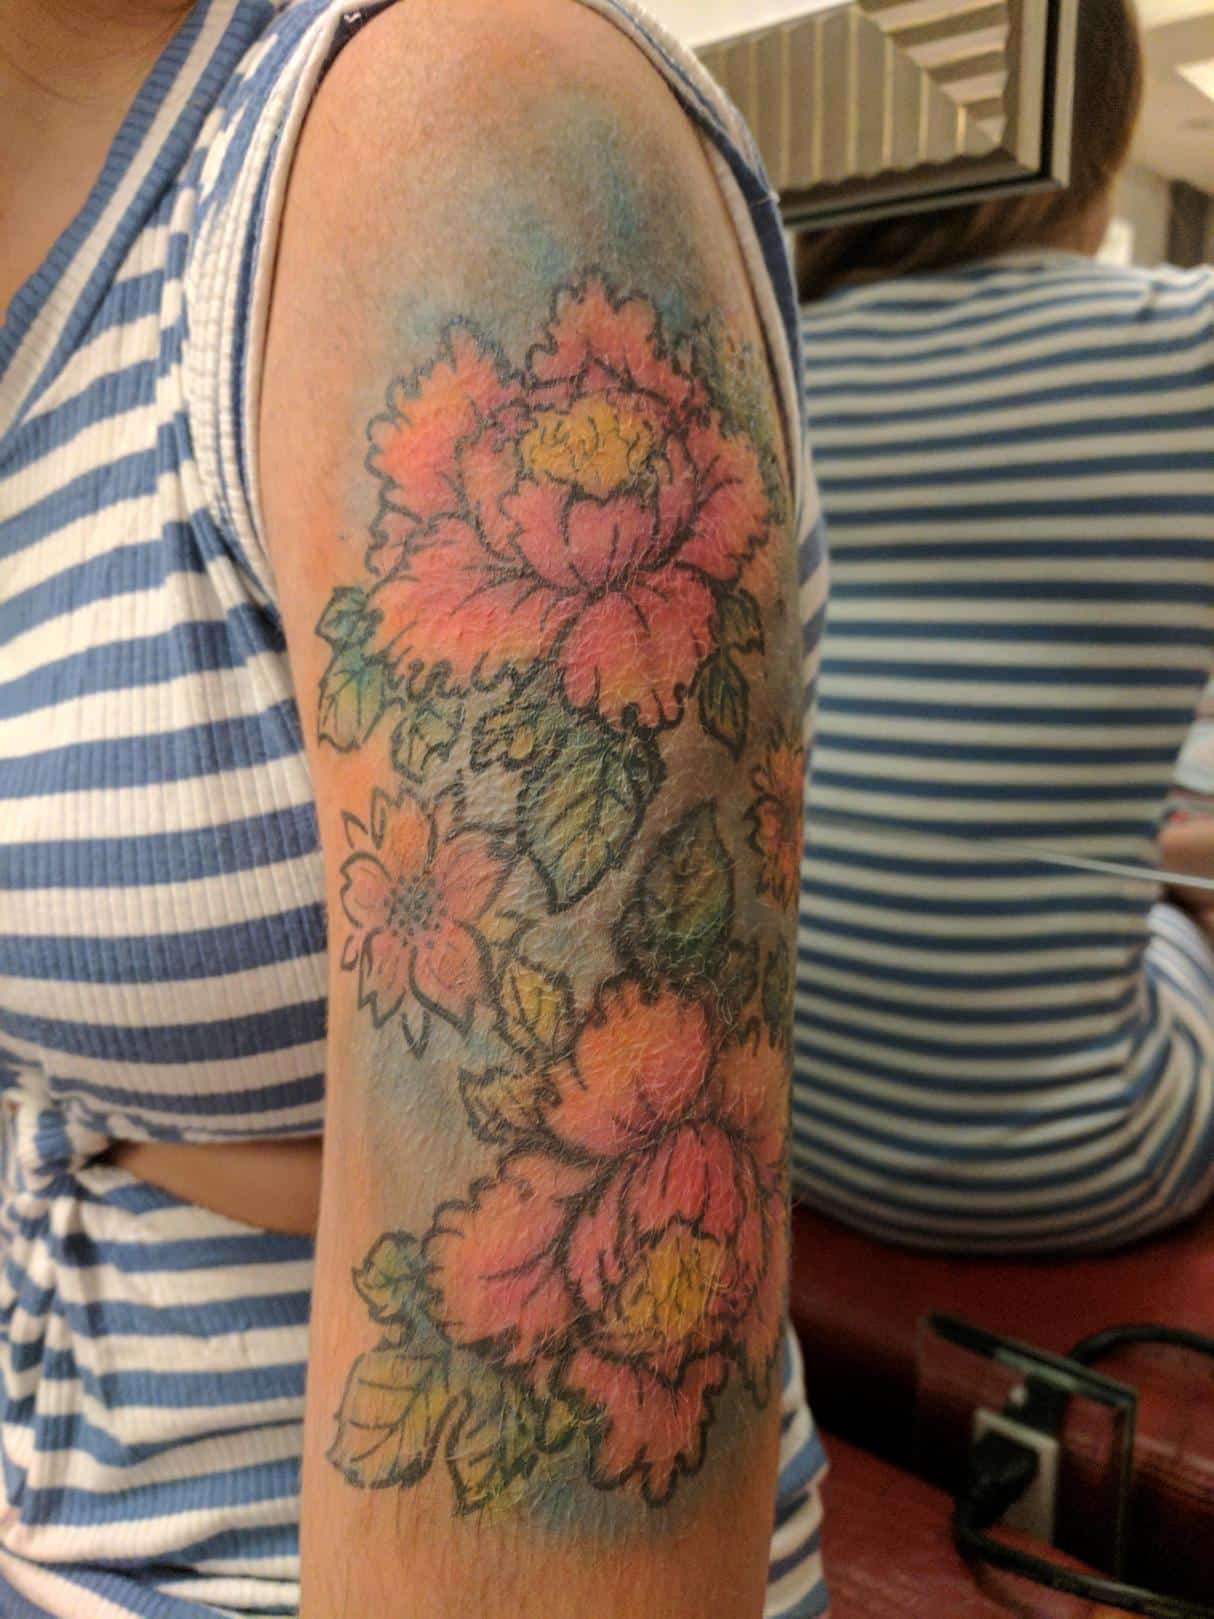 Tat Bar Las Vegas Temporary Airbrush Tattoo Floral Sleeve